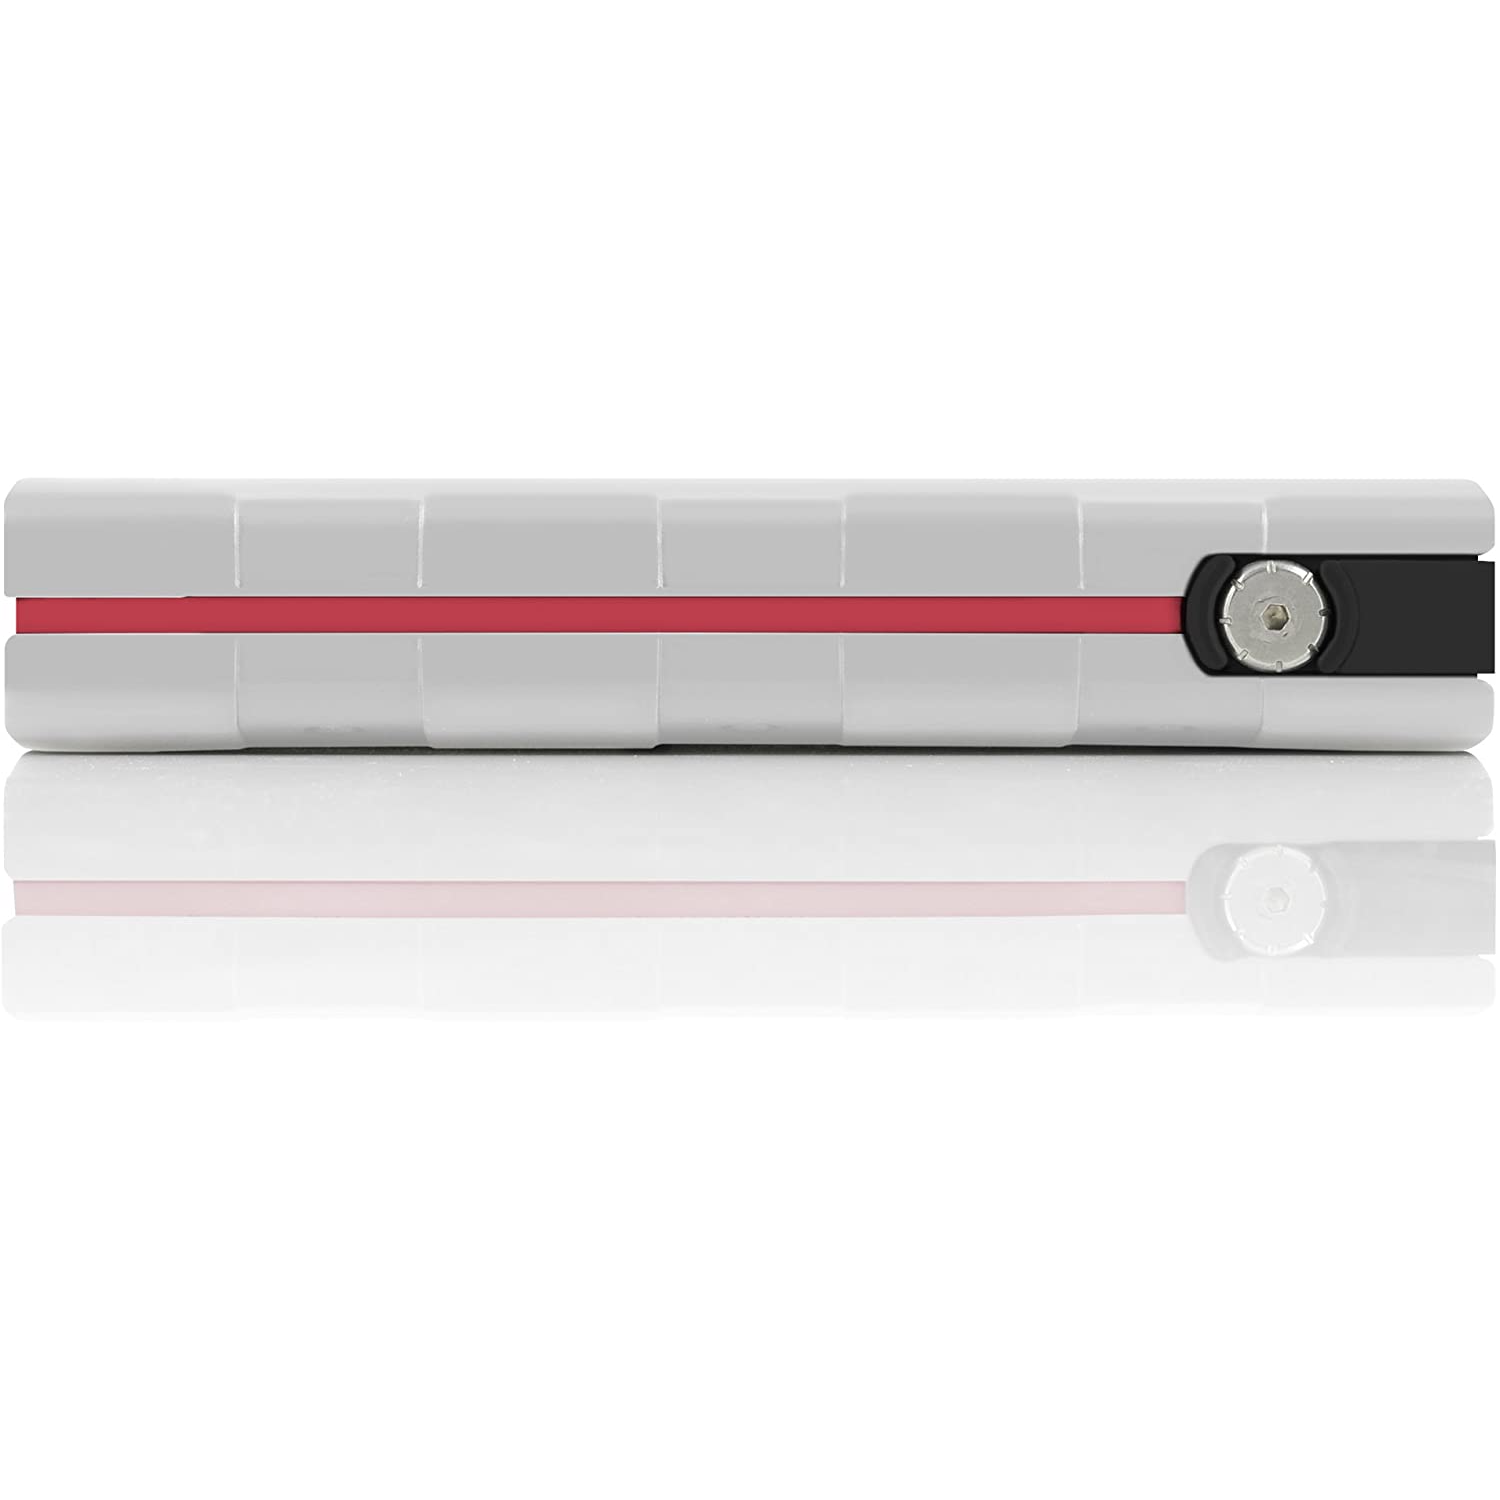 Braven BRV-Bank-6000 mAh Smart, Ultra-Rugged Portable Backup Battery-Gray/red